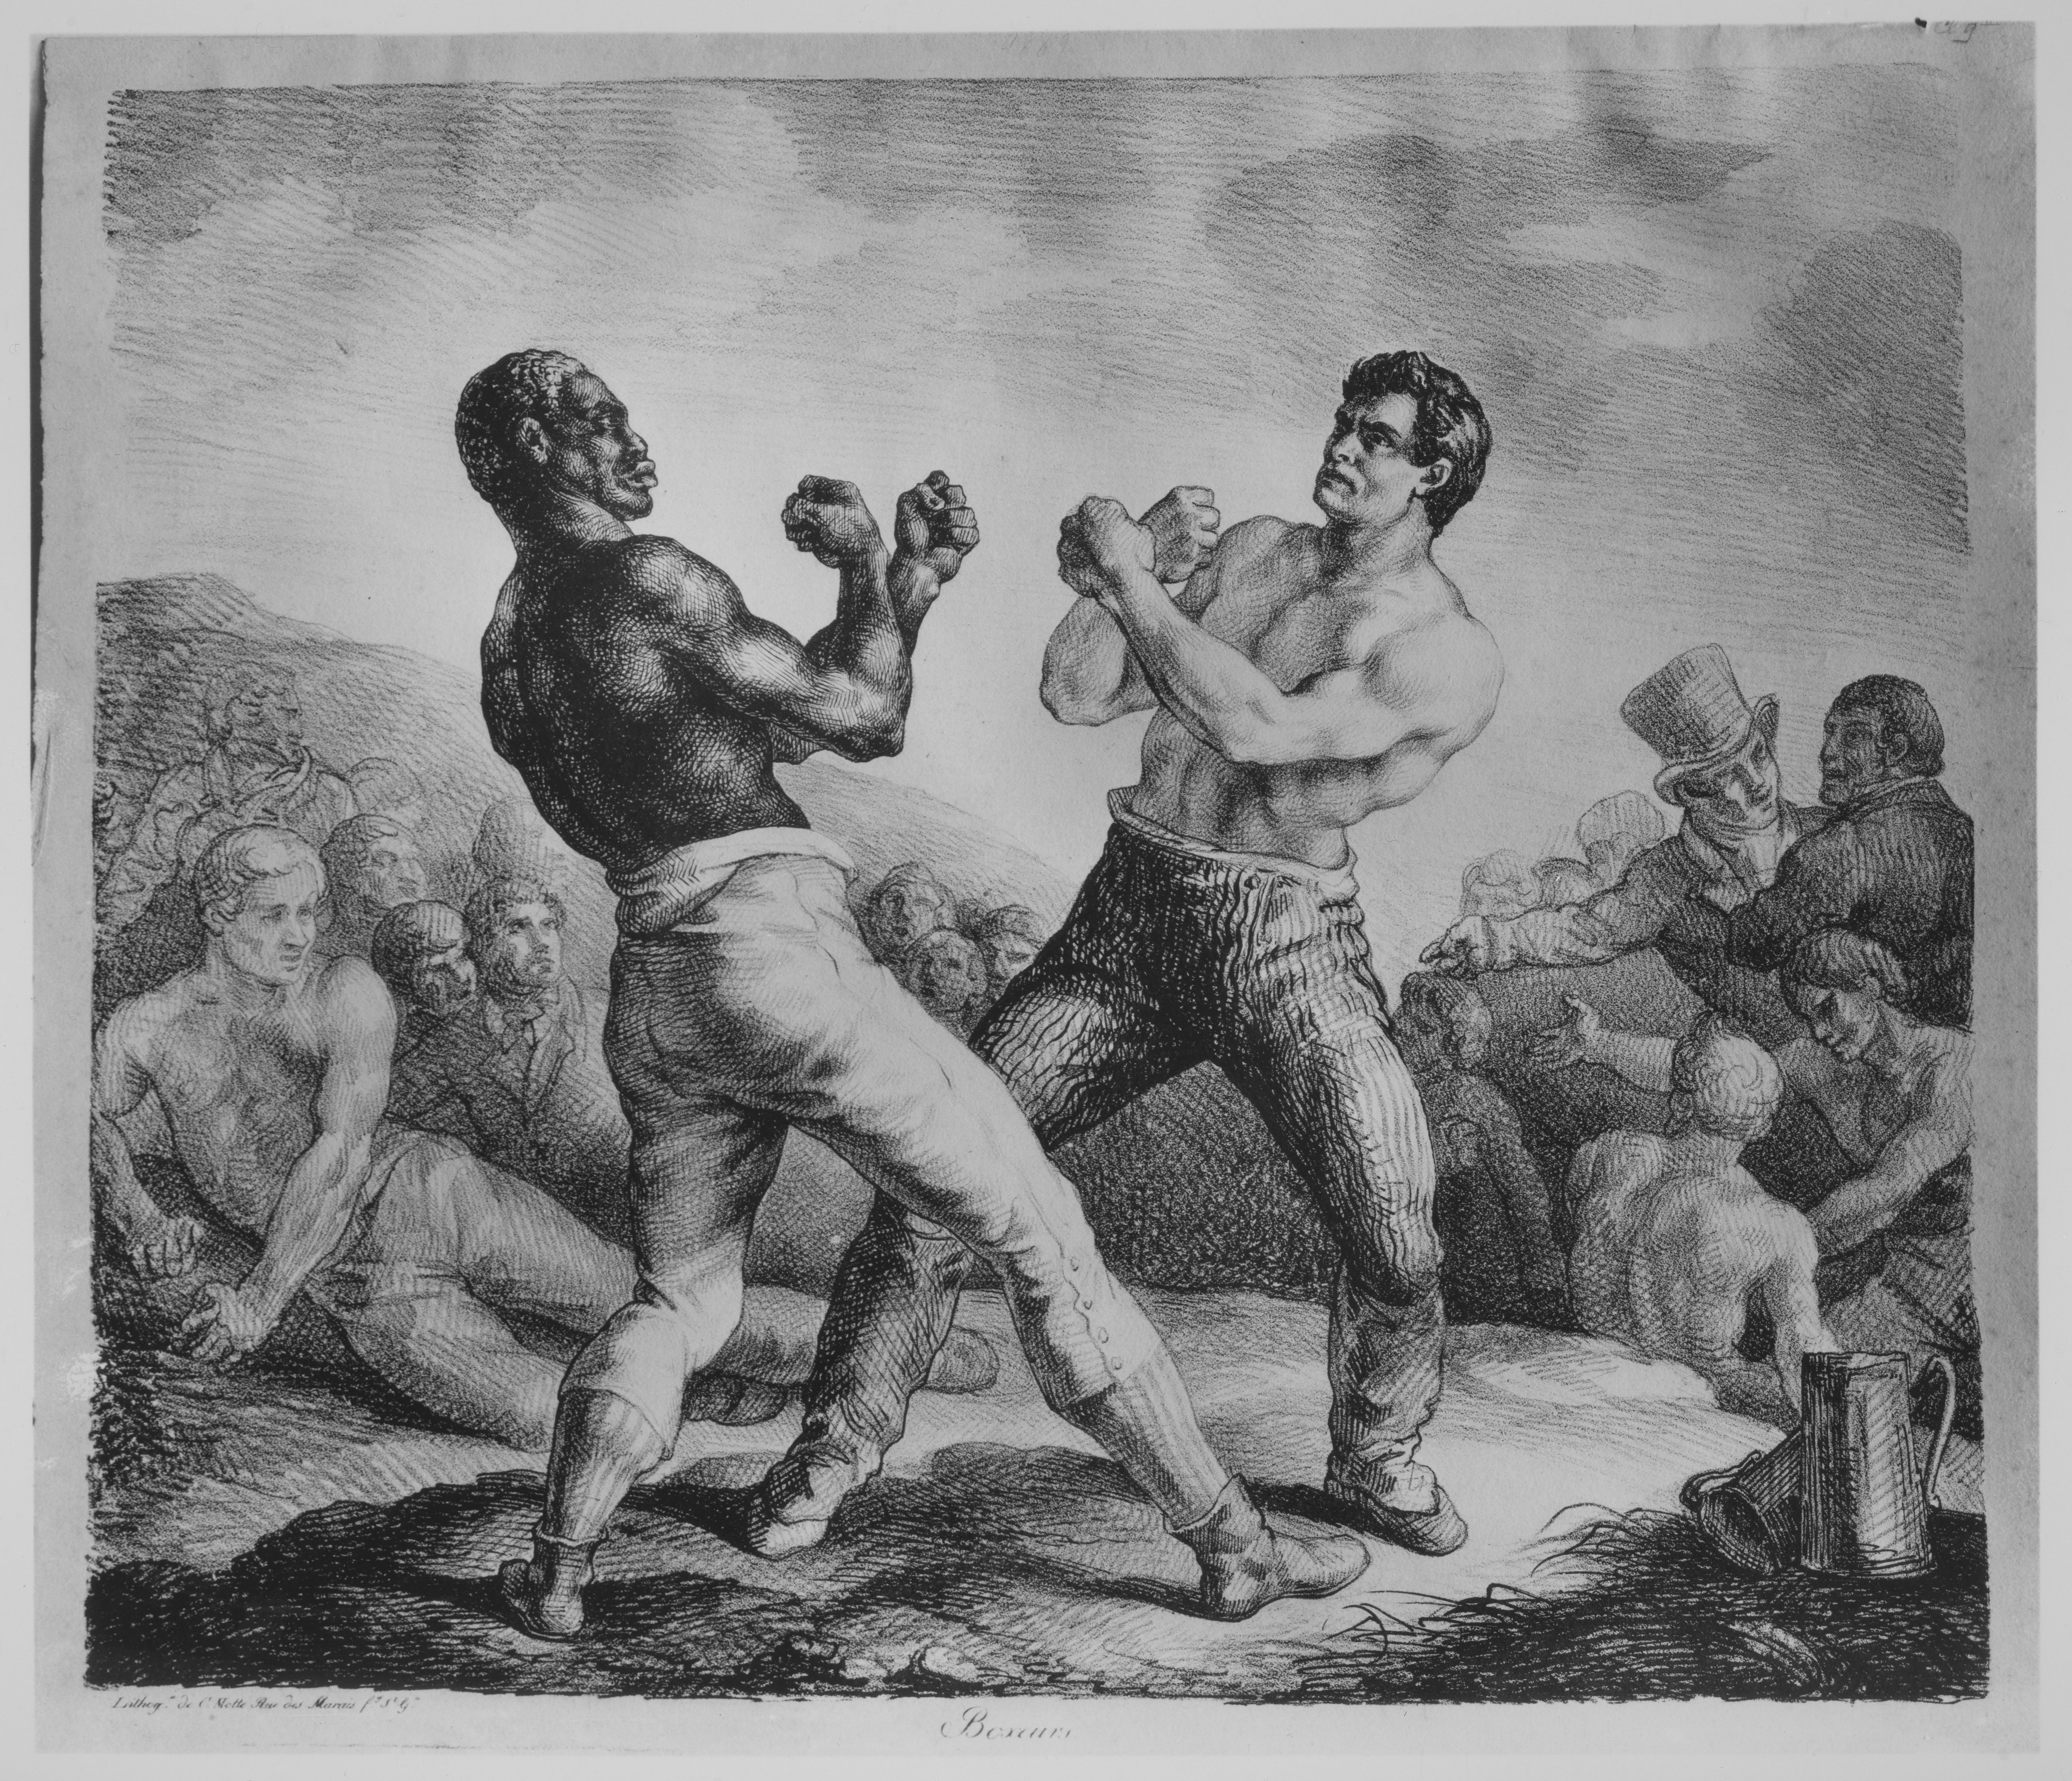 boxing art